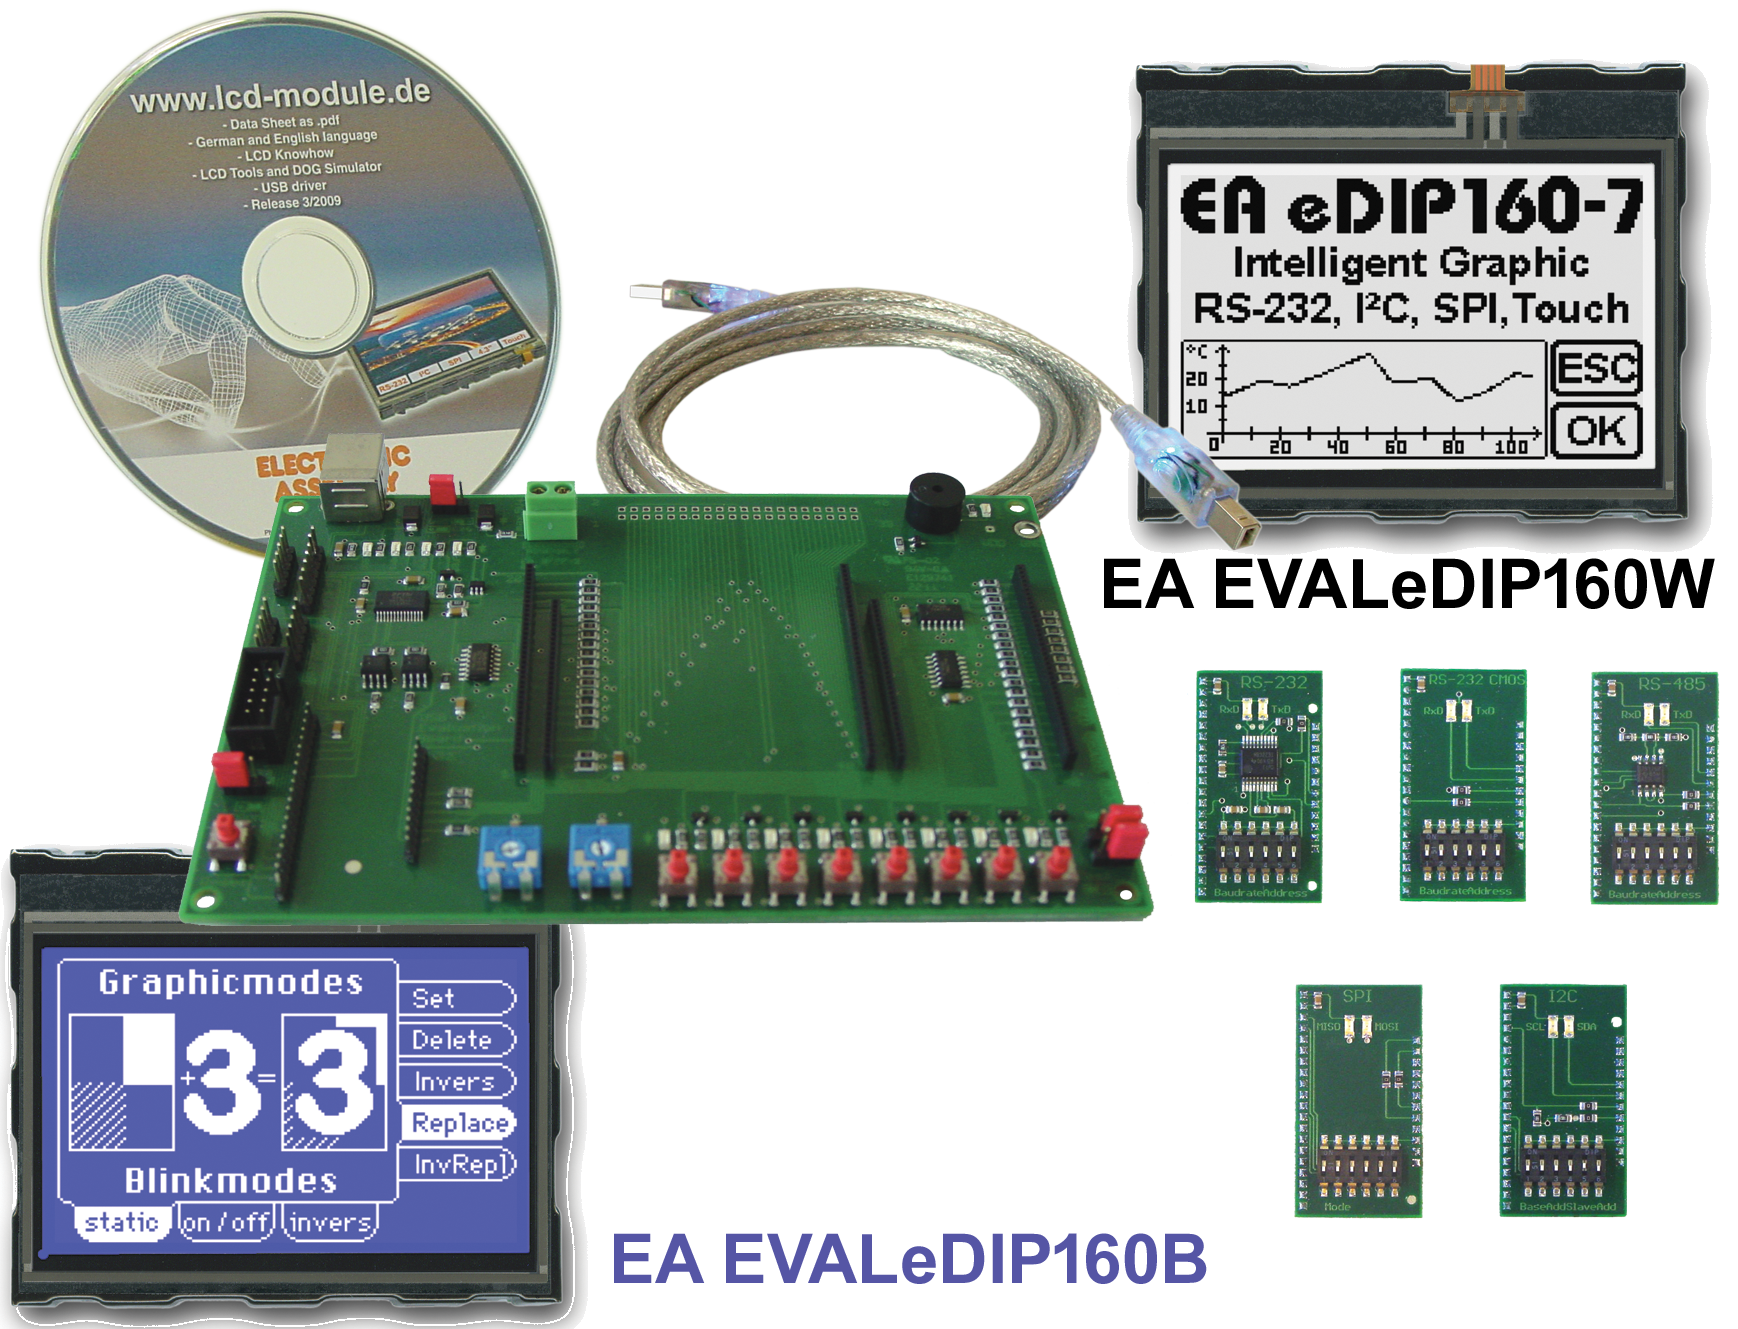 Evaluation KIT EA EVALEDIP160B with EA eDIP160-7LWTP